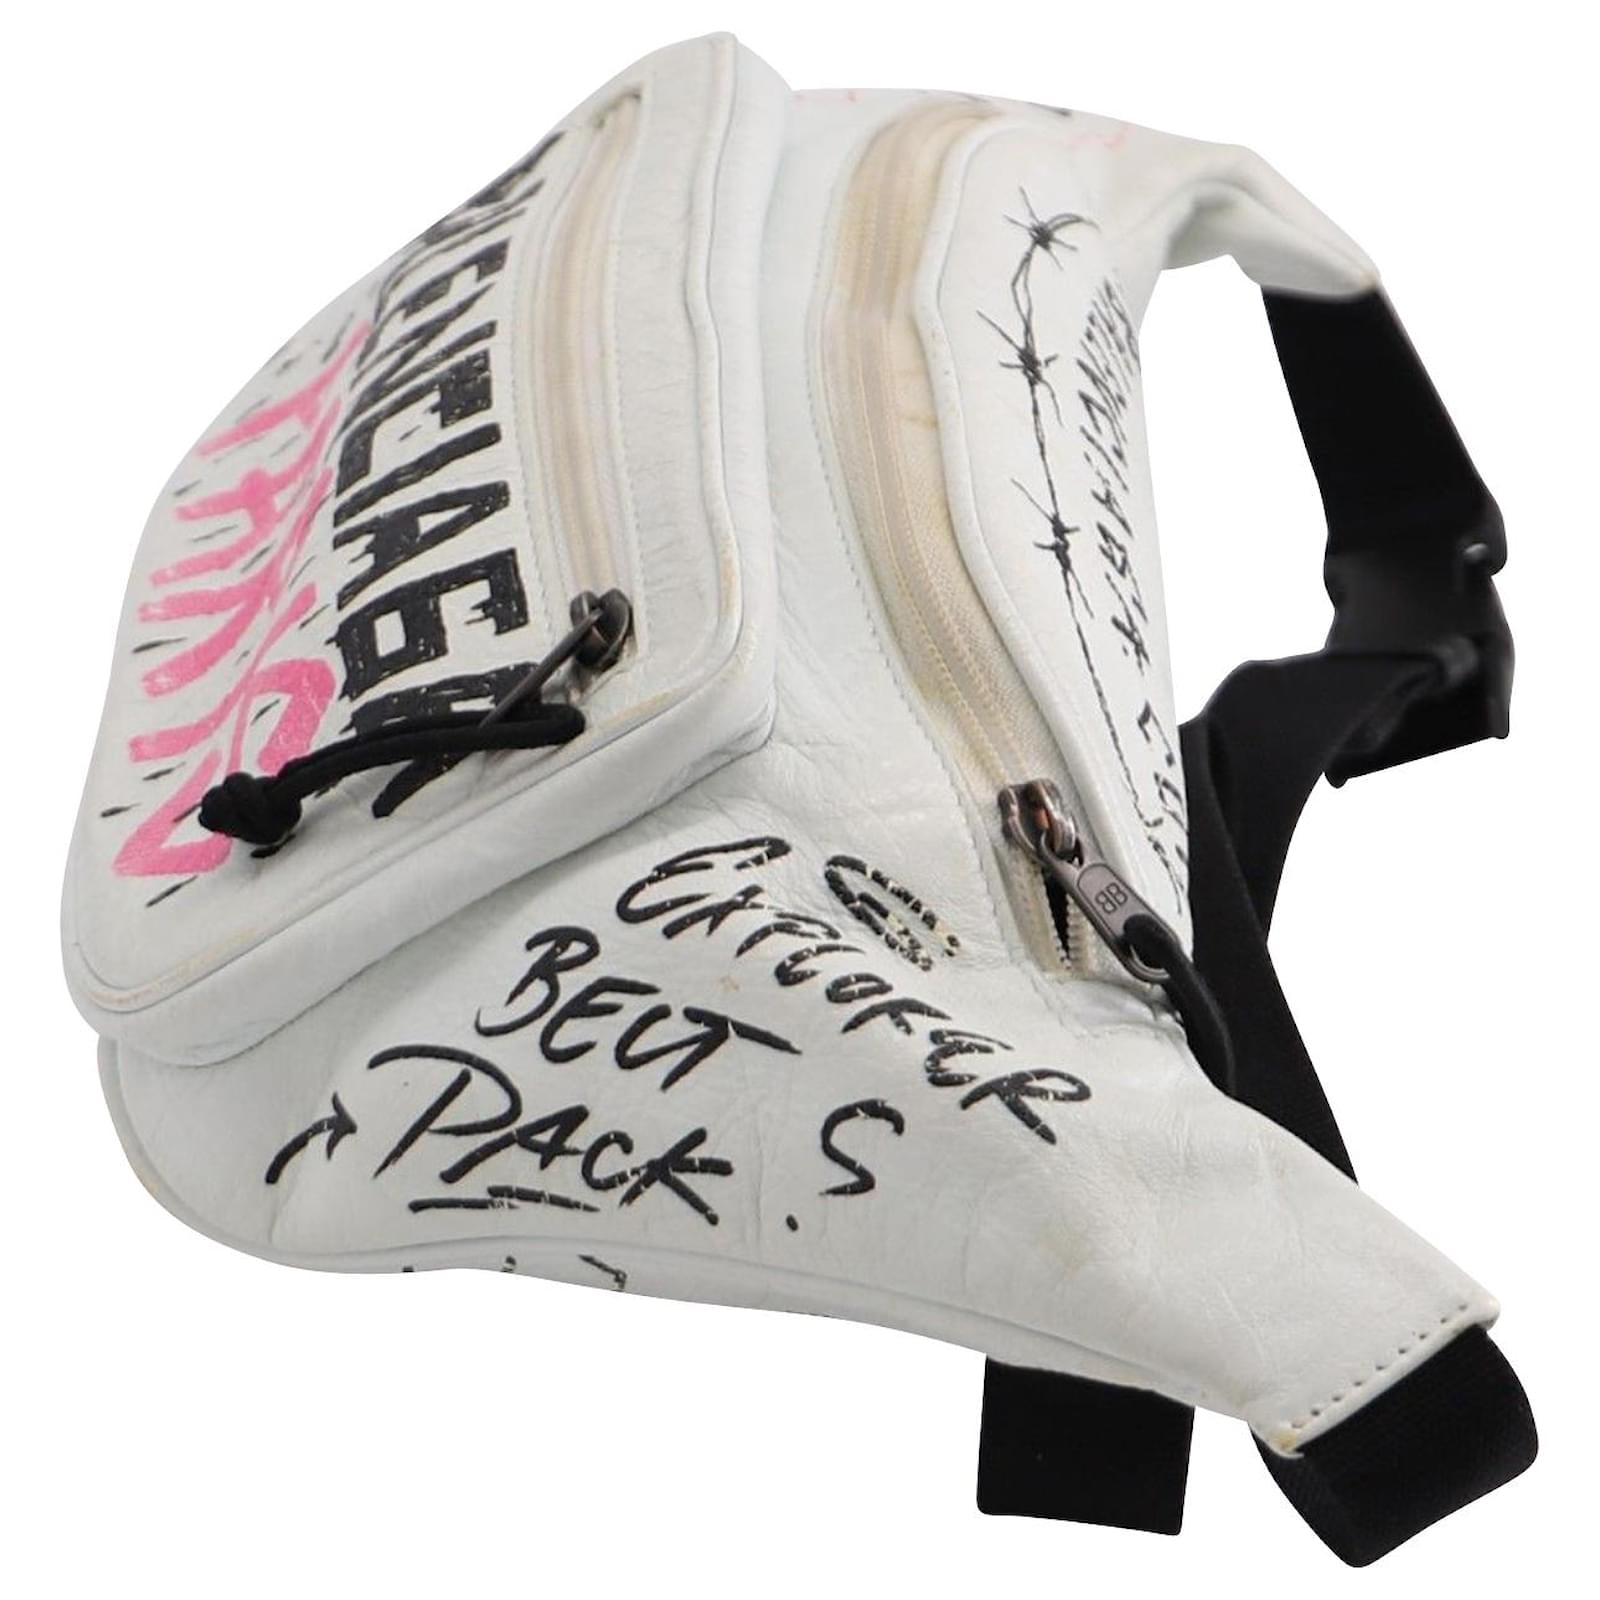 Balenciaga White Graffiti Leather Explorer Belt Bag